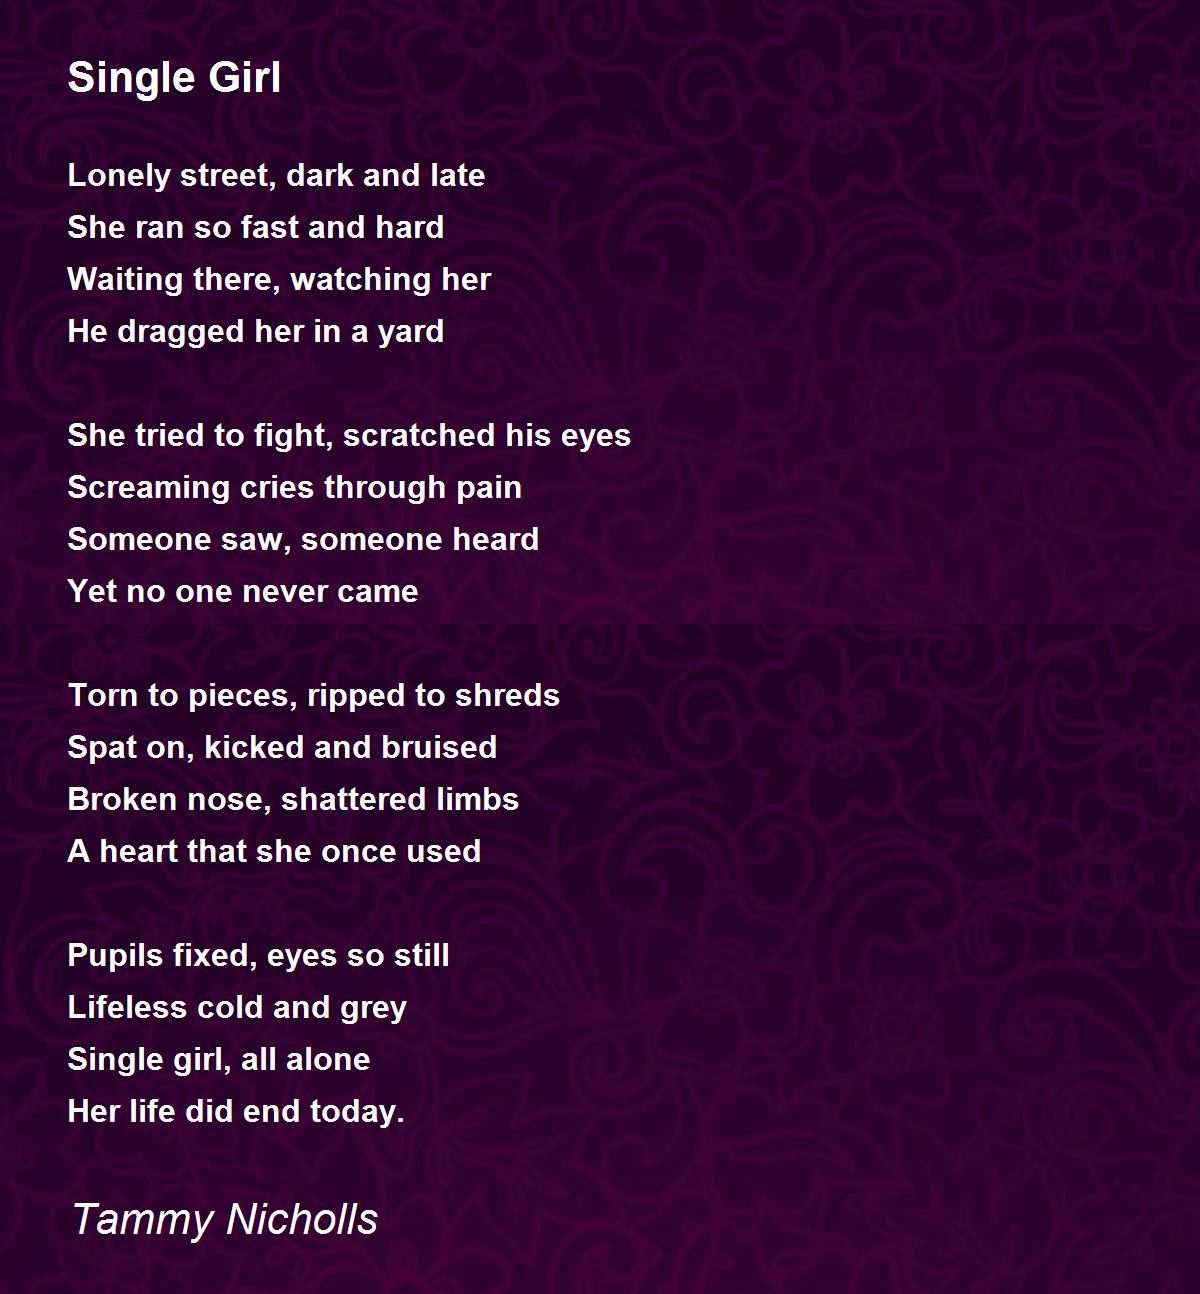 Single Girl - Single Girl Poem by Tammy Nicholls